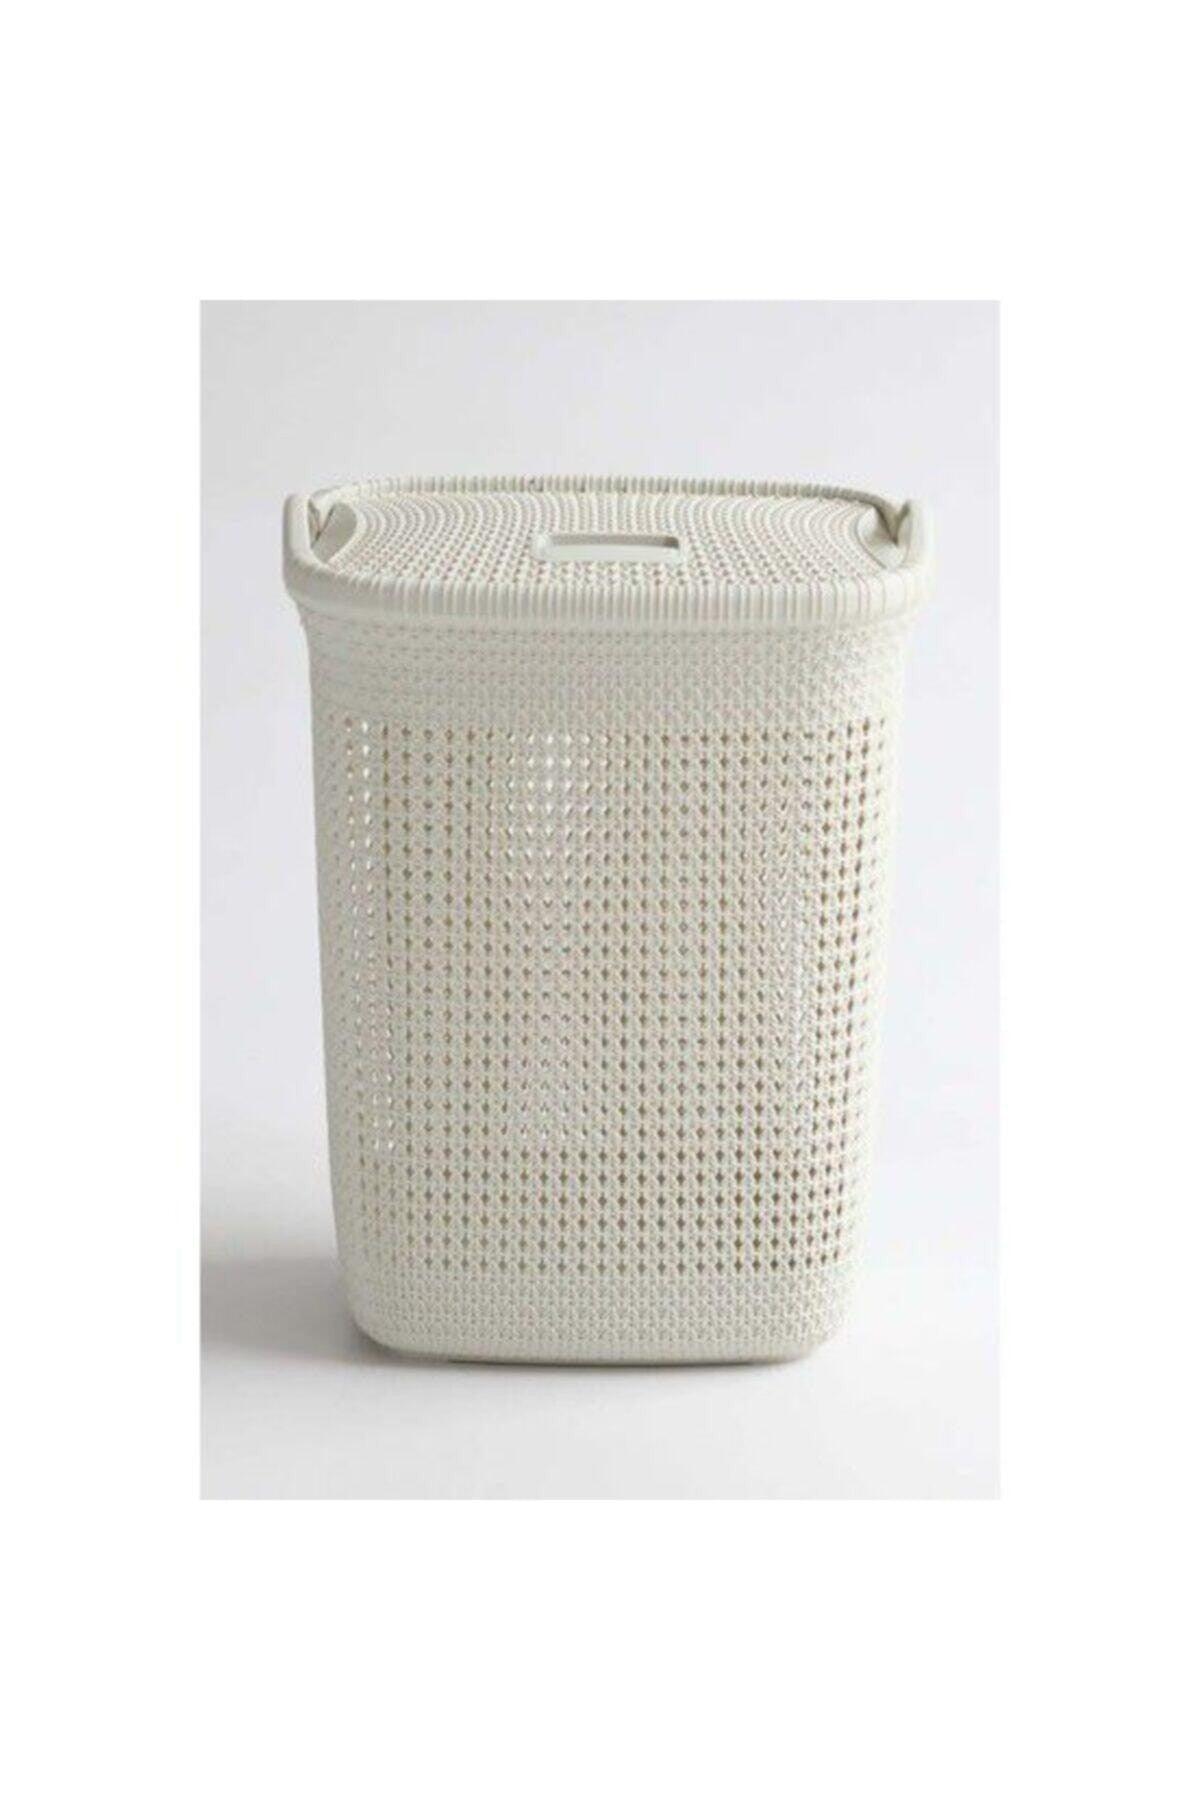 Ivory Knitted Patterned 52 Liter Dirty Laundry Basket - Swordslife